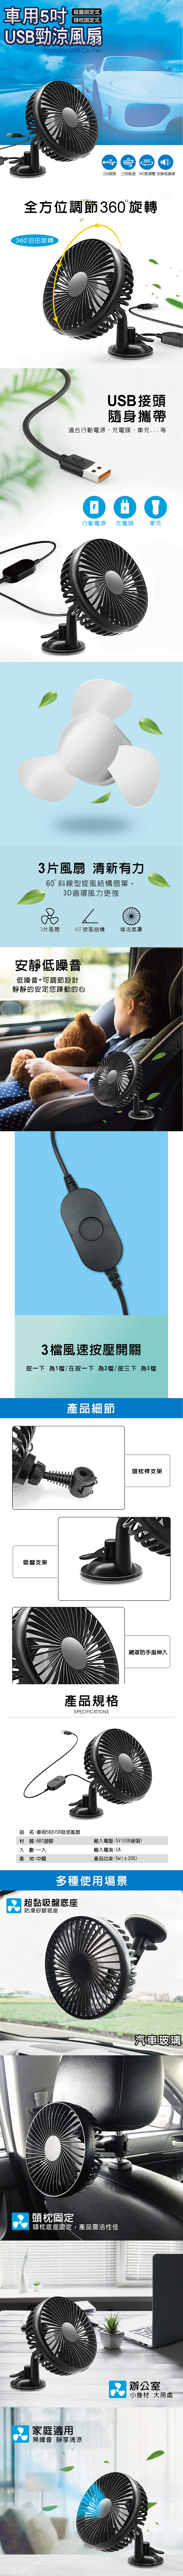 【SINYI新翊】汽車兩用5吋涼風扇 USB充電/可固定椅背/低噪音運作